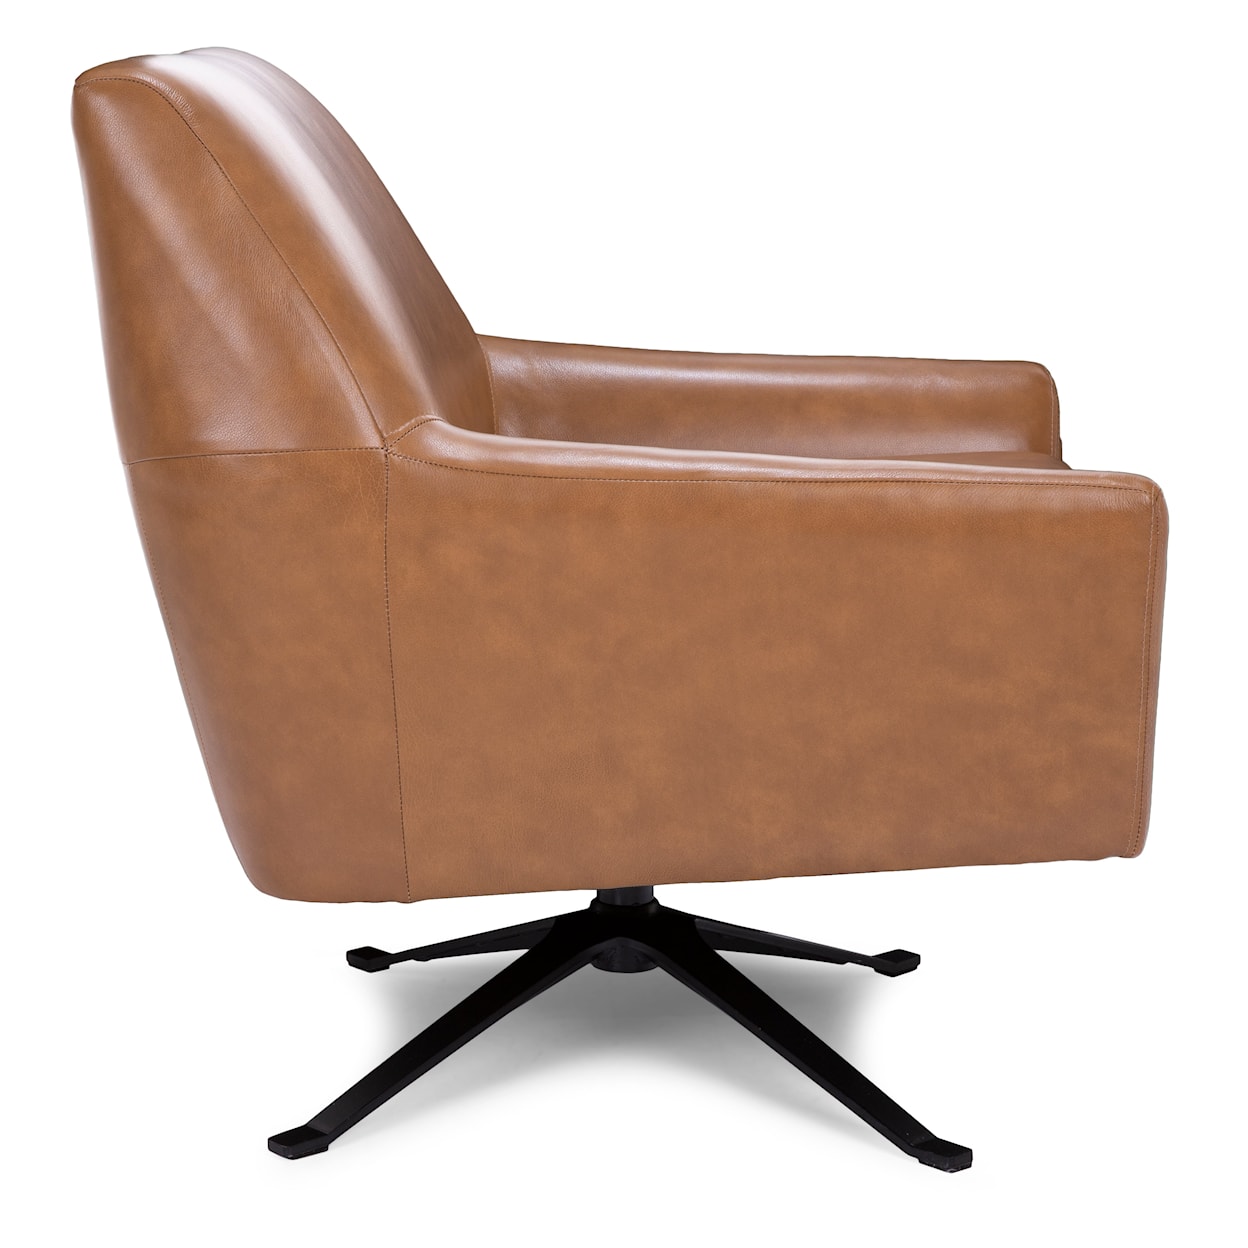 Decor-Rest 3097 Swivel Base Accent Chair 